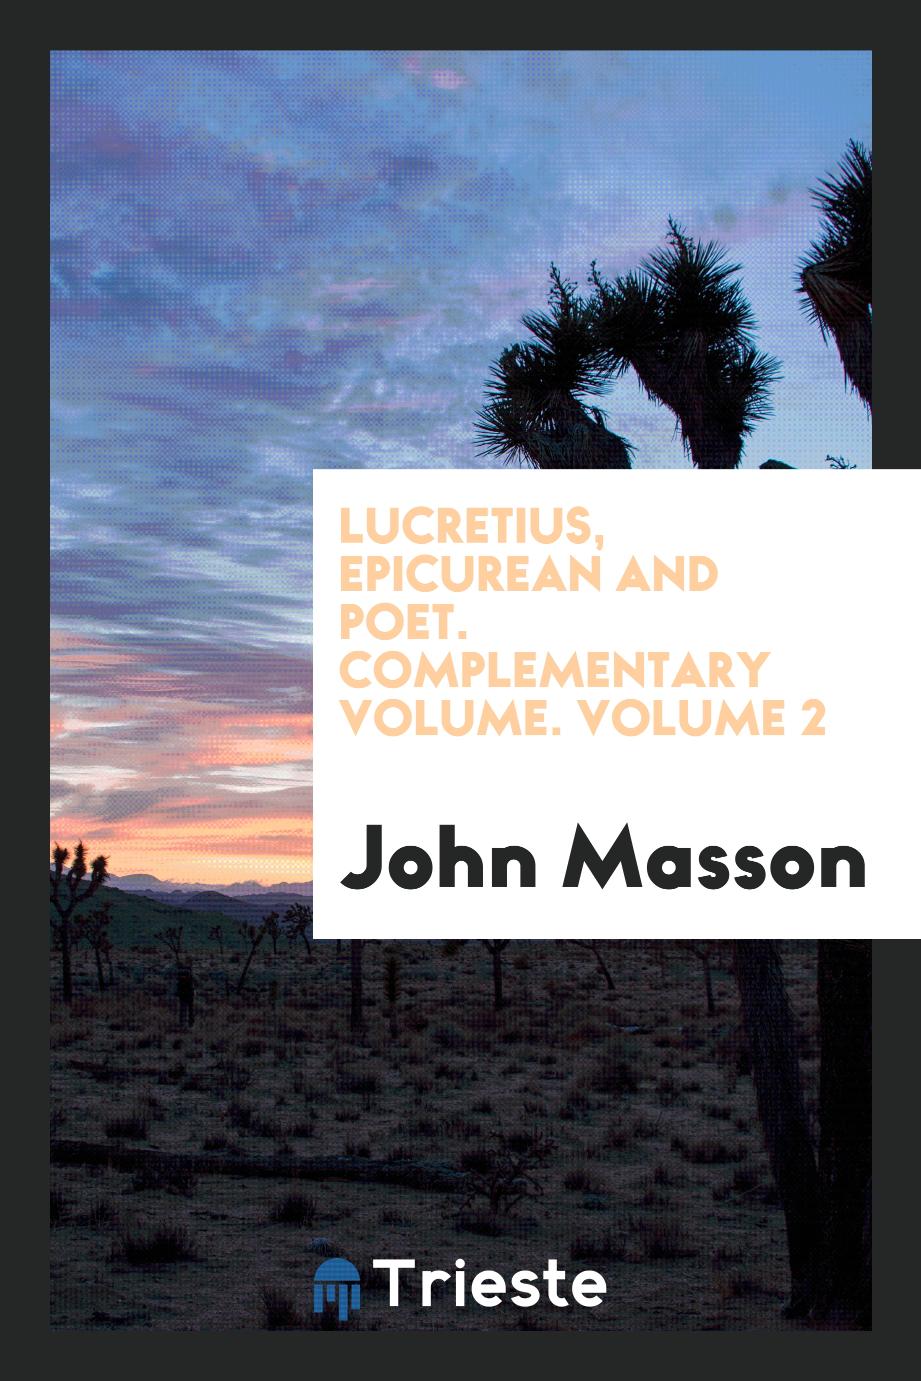 Lucretius, epicurean and poet. Complementary volume. Volume 2